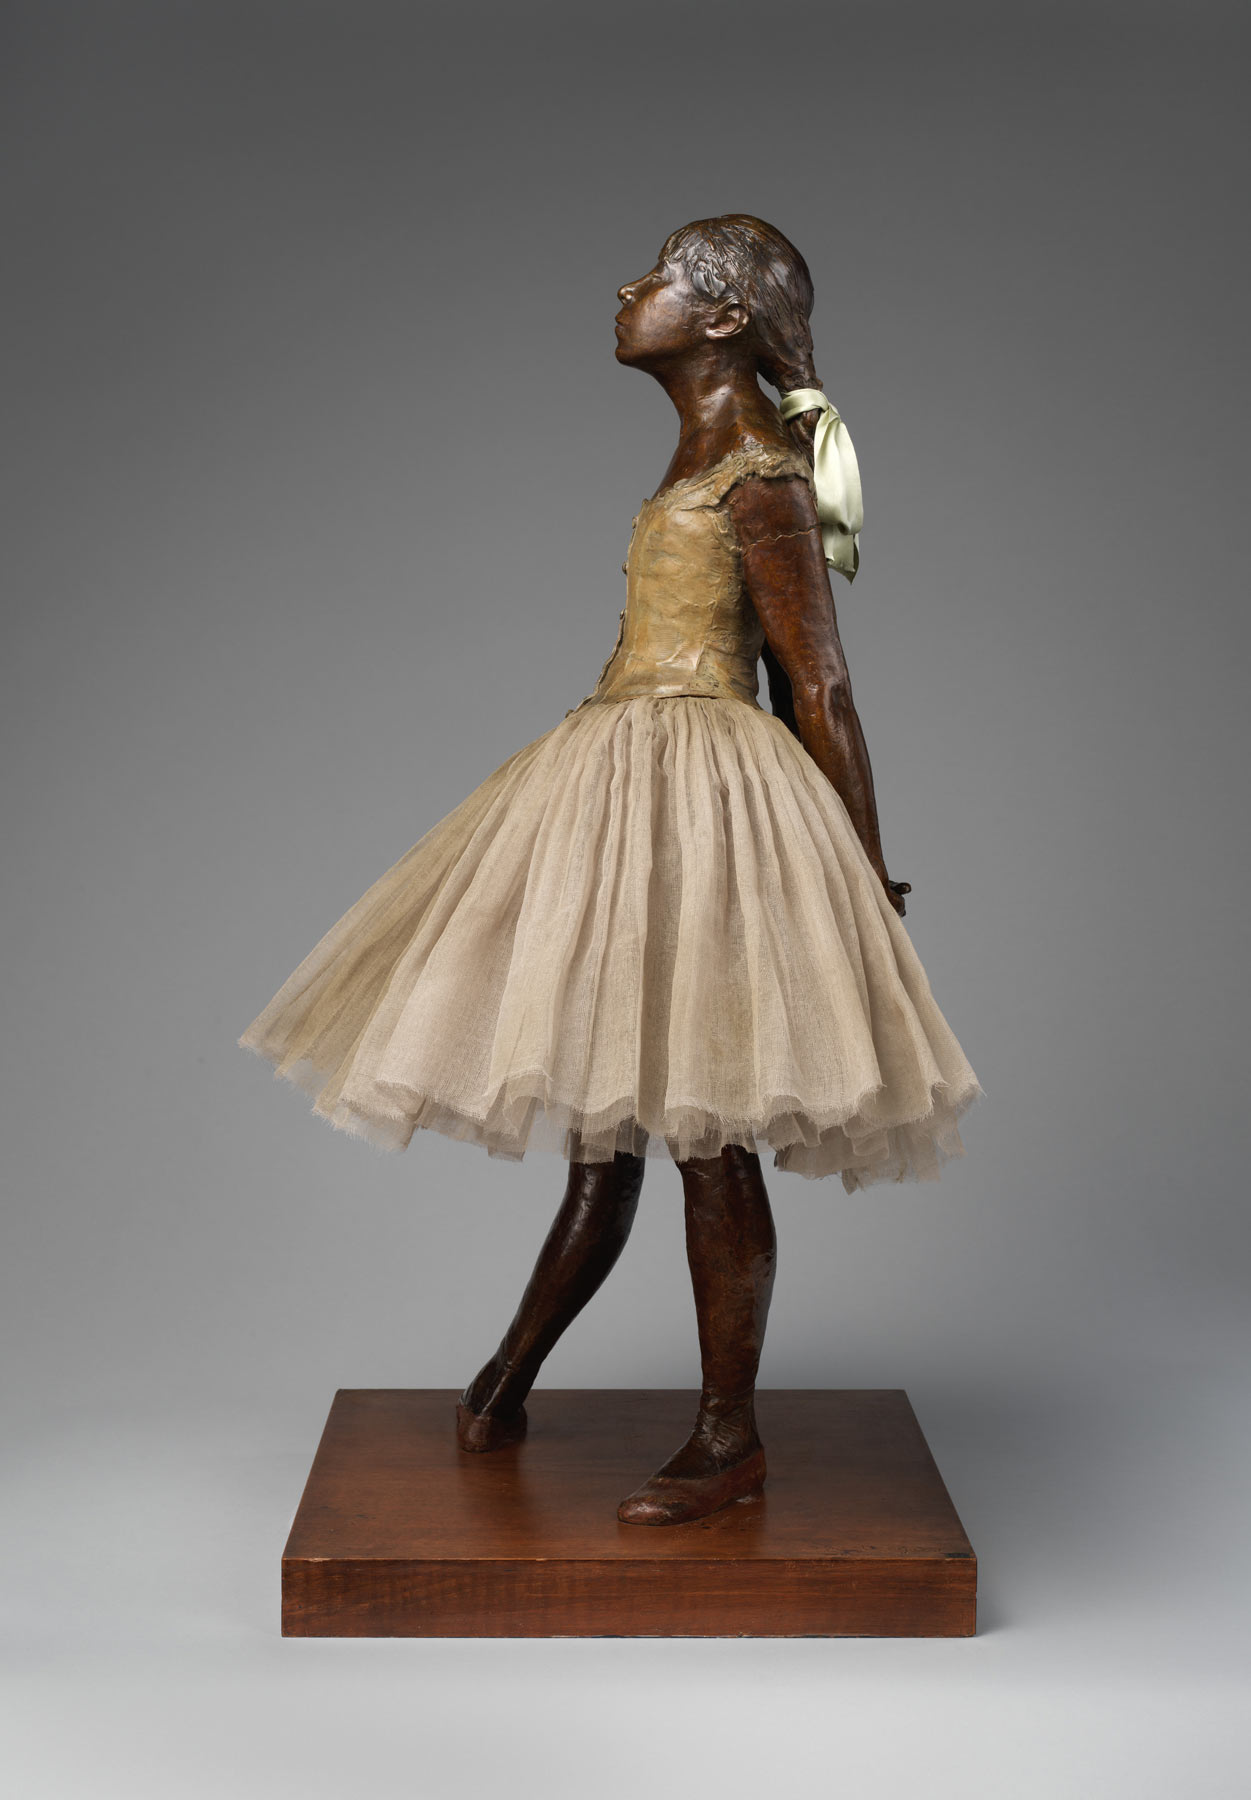 Edgar Degas, Adrien-Aurélien Hébrard, Piccola ballerina di quattordici anni (1922; bronzo, tarlatana, raso di seta, legno, 97,8 x 43,8 x 36,5 cm; New York, Metropolitan Museum)
